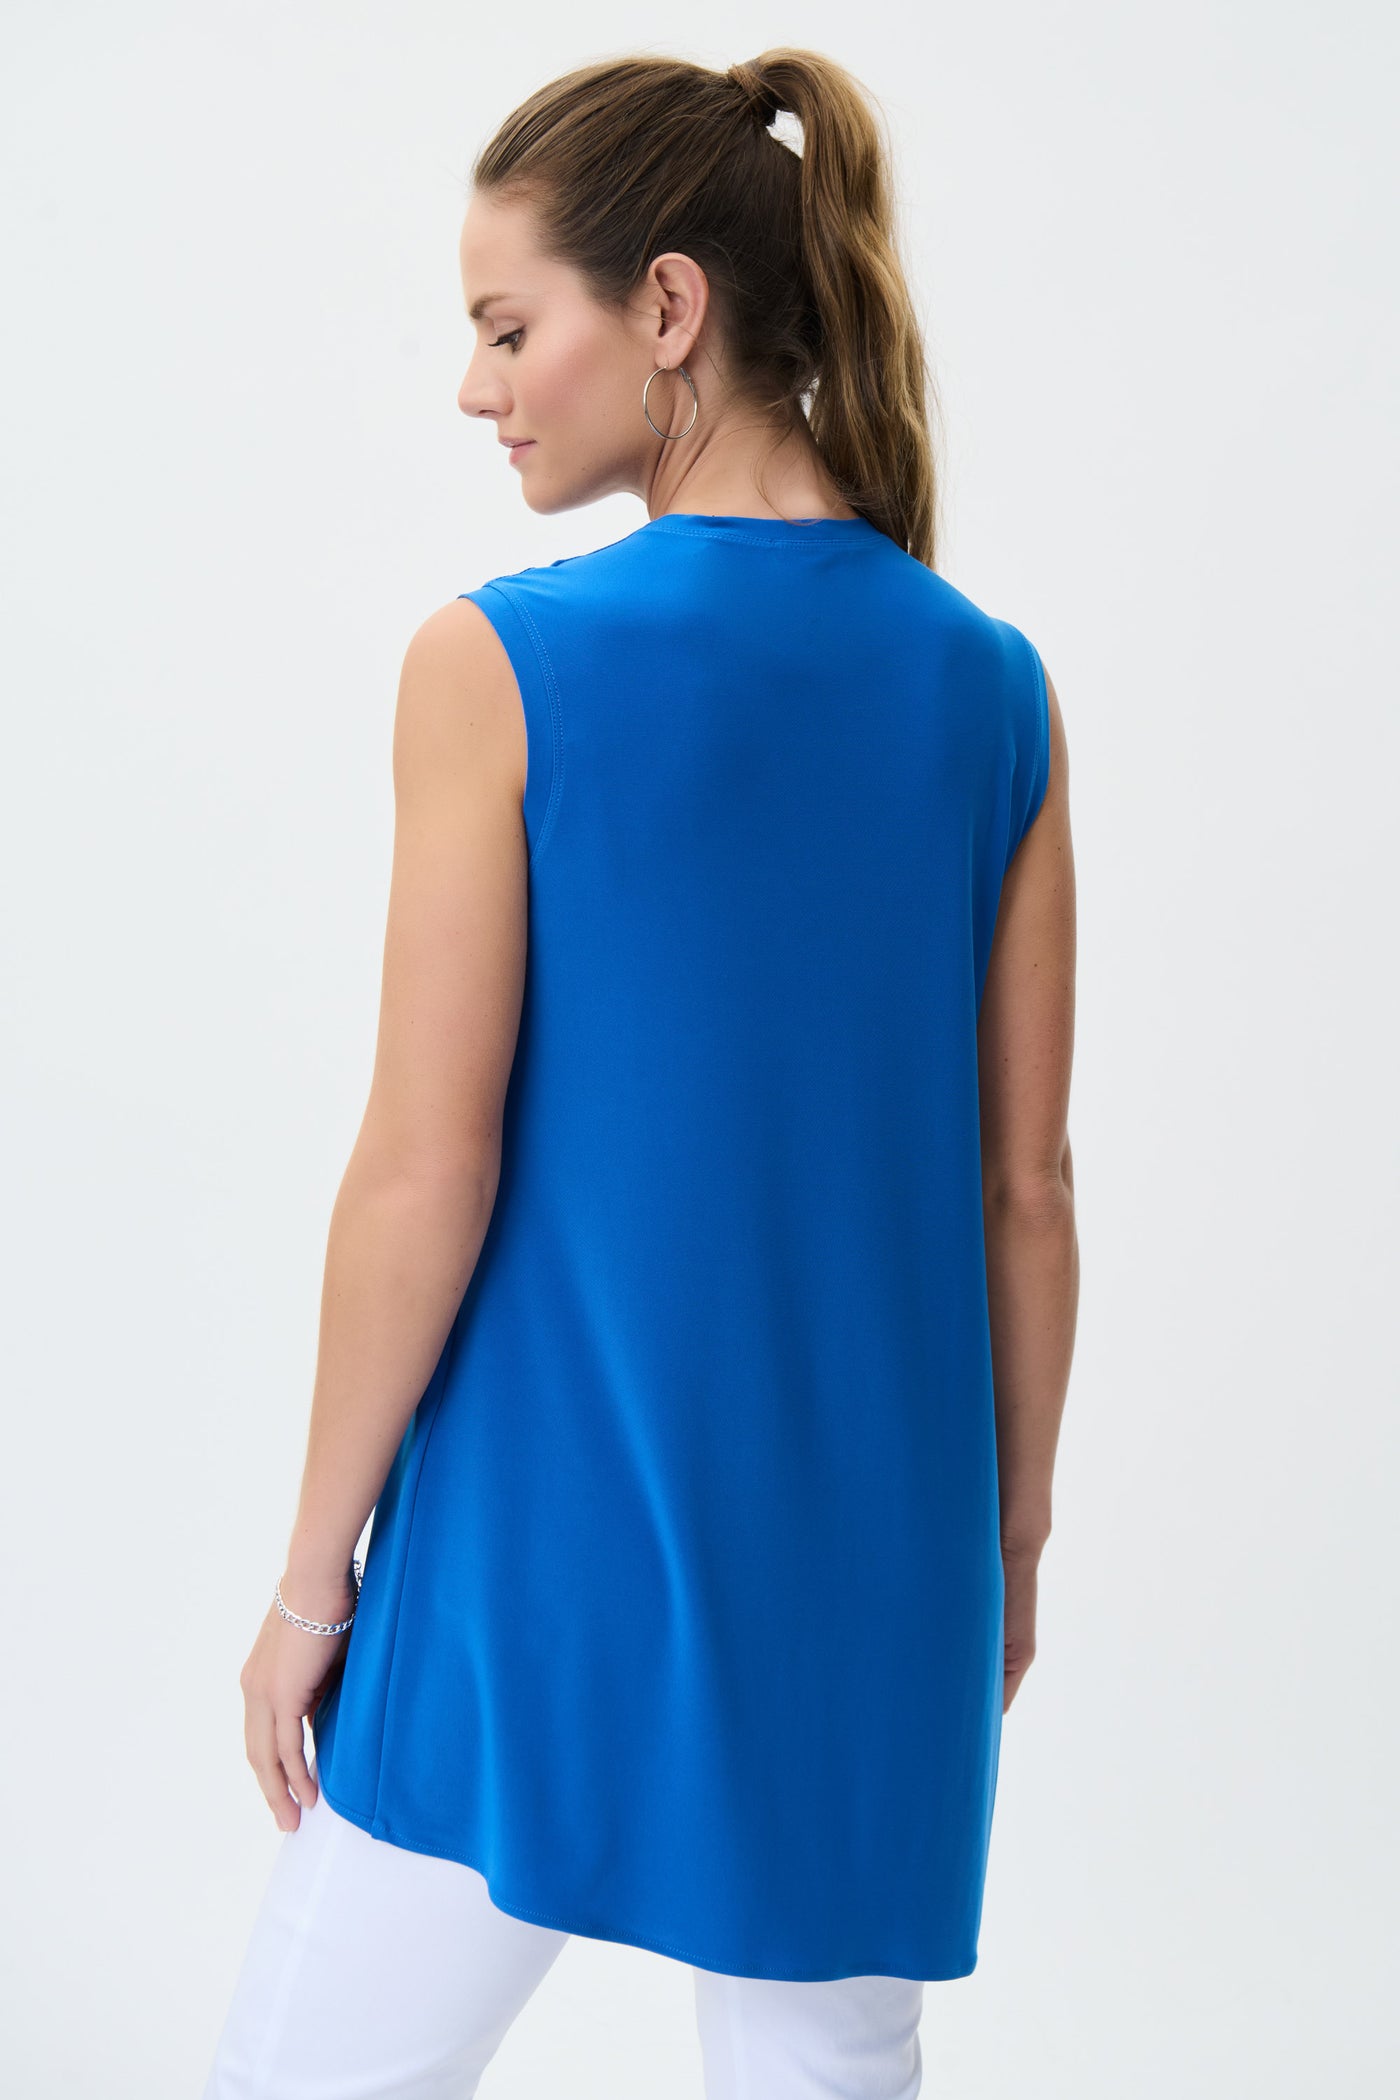 Joseph Ribkoff Asymmetrical Sleeveless Tunic, 3 Spring Colors Style 161060J 